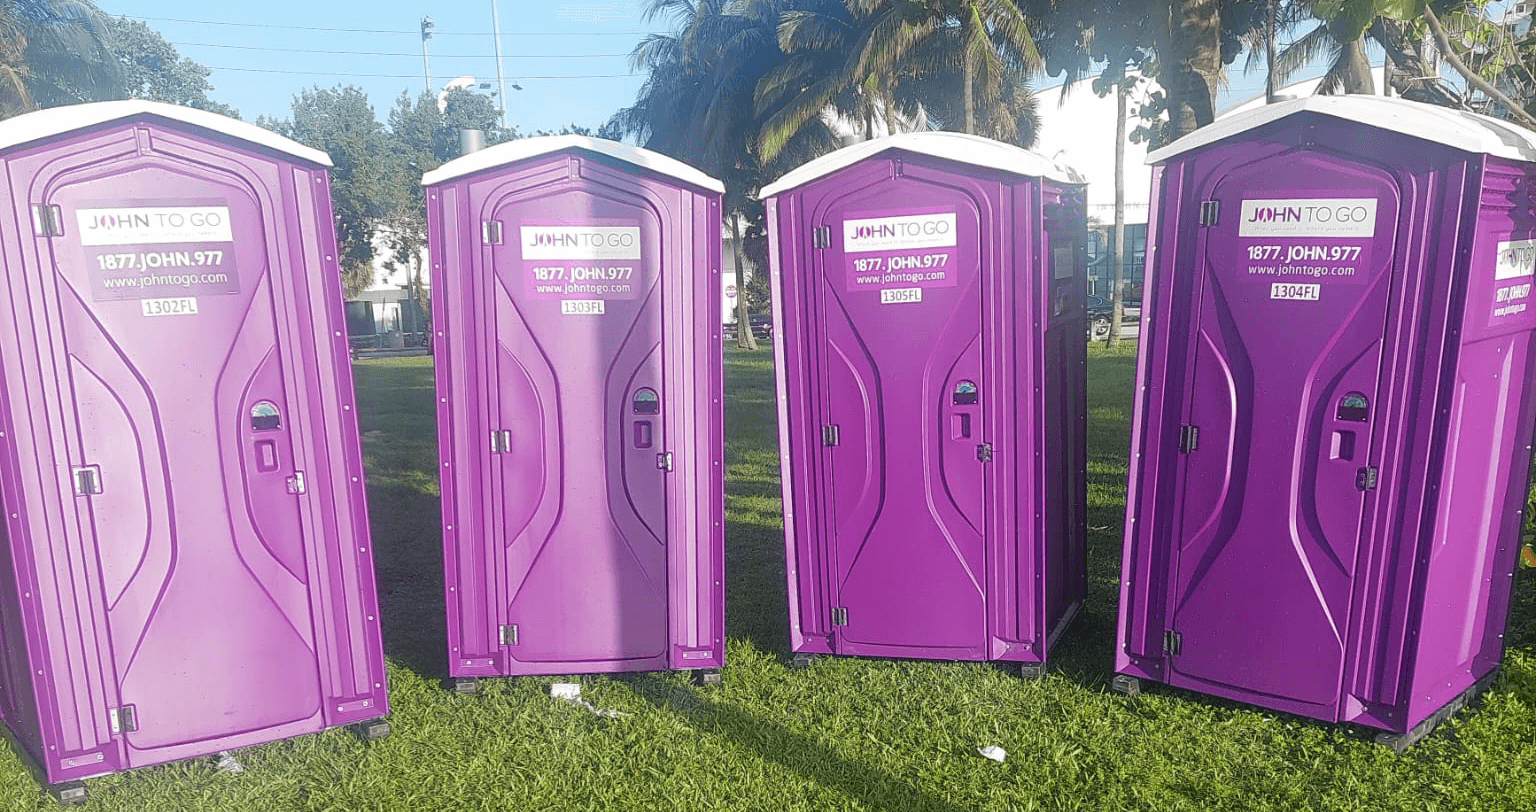 Portable toilet restroom services in Florida